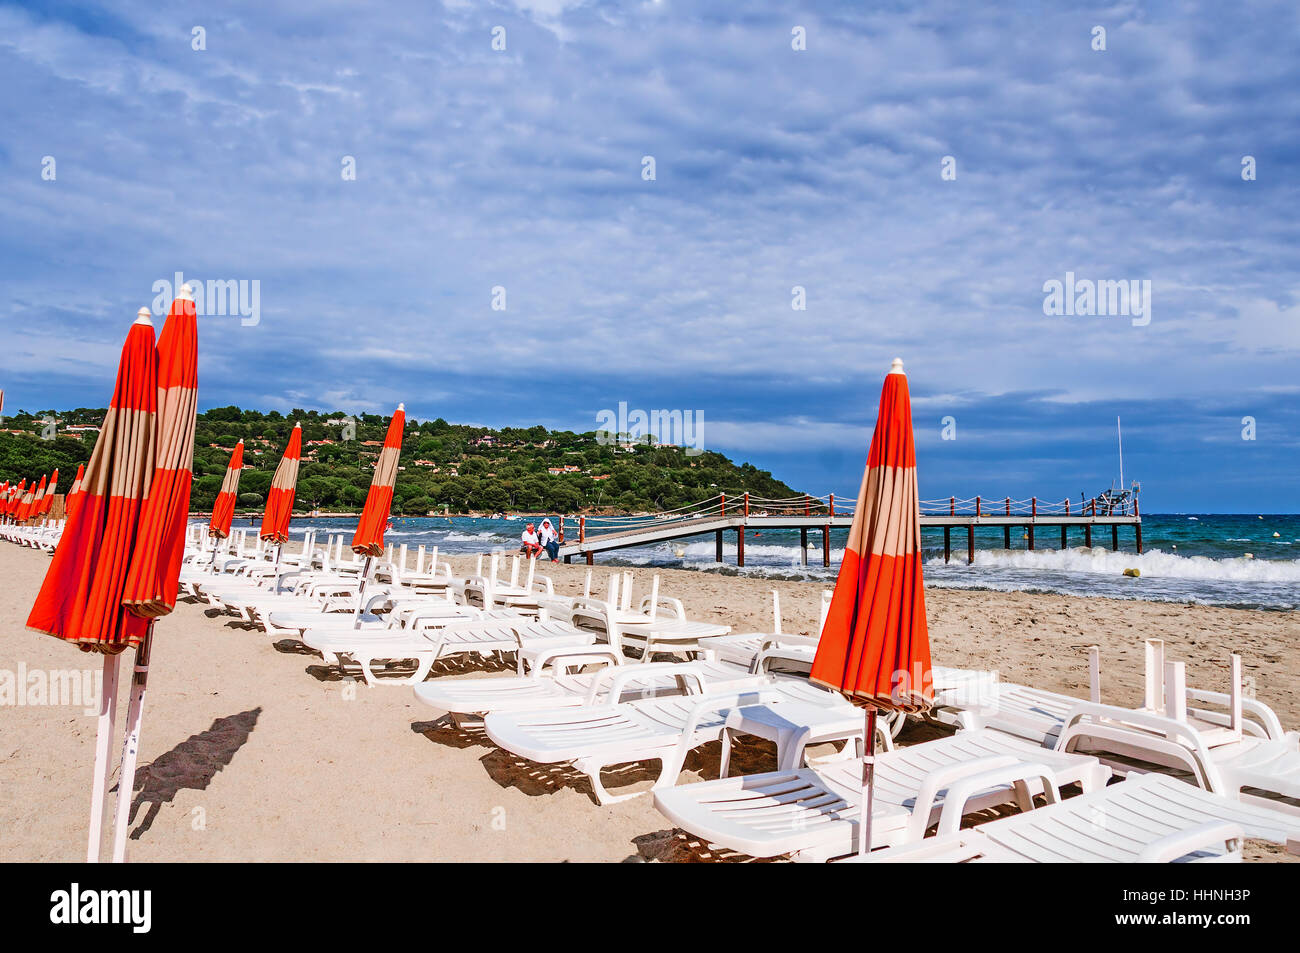 beach, seaside, the beach, seashore, bridge, sunshades, sandy beach, blue, Stock Photo